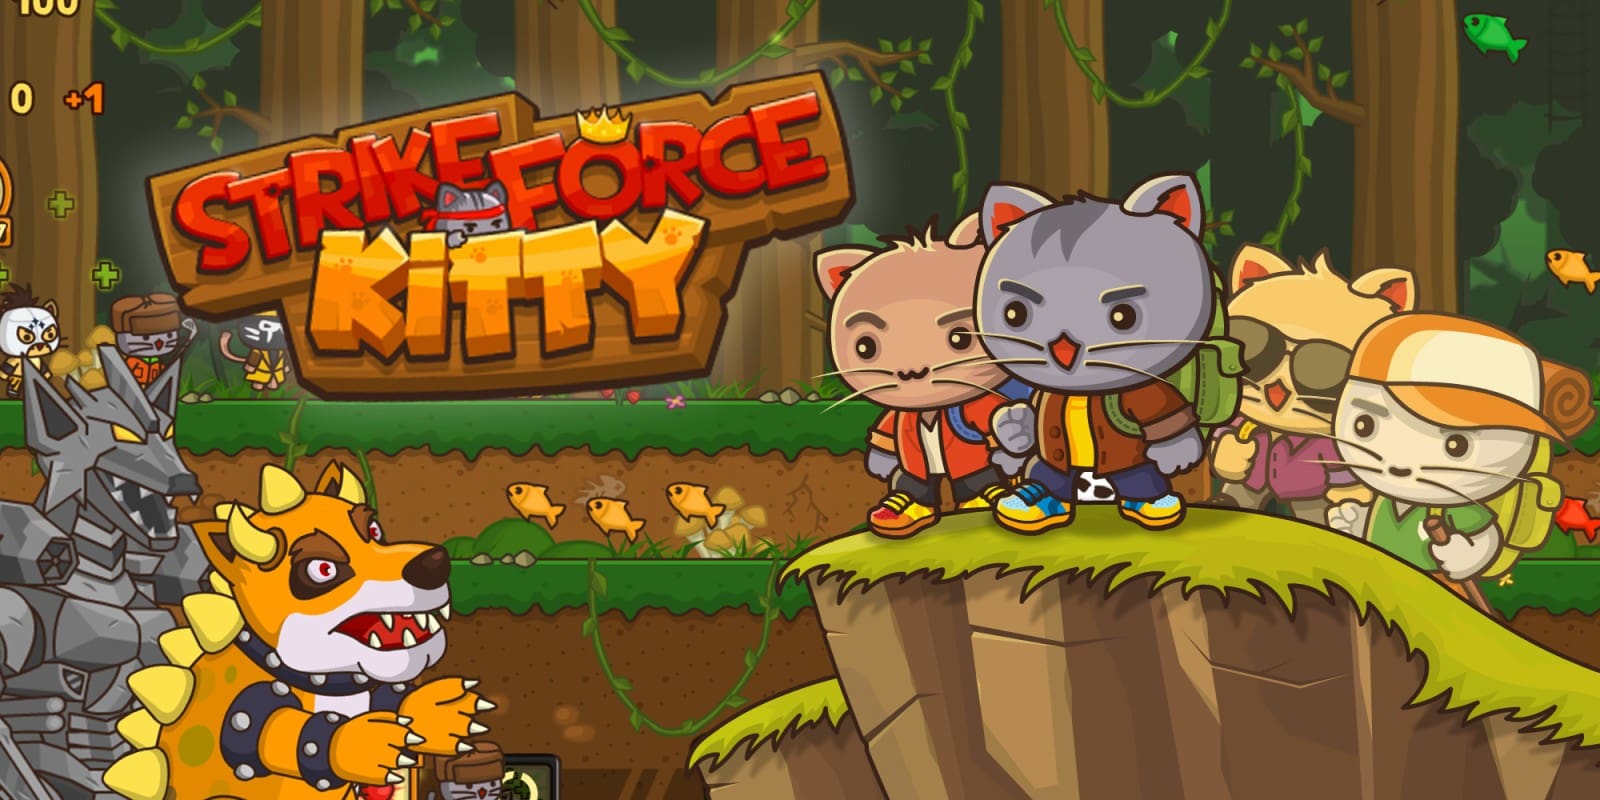 STRIKEFORCE KITTY 2 jogo online gratuito em